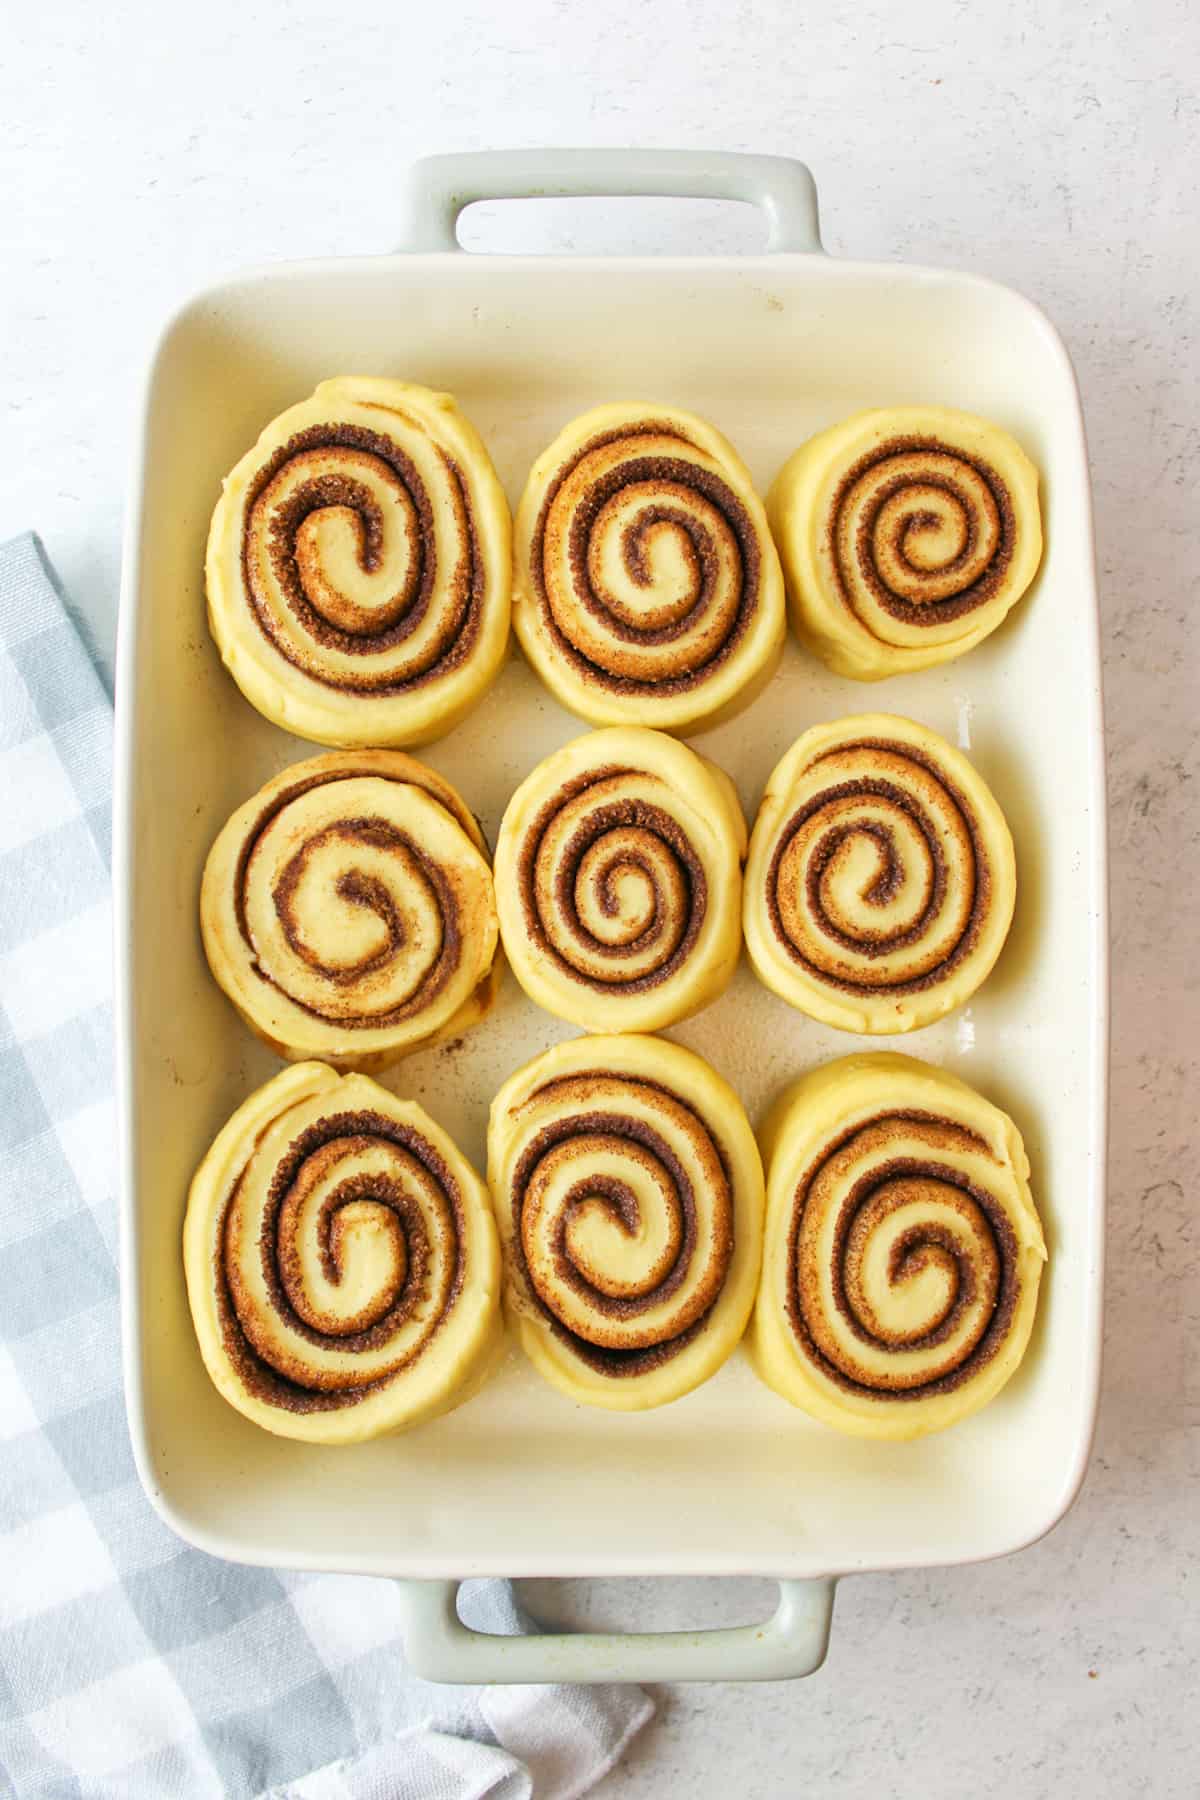 9 cut cinnamon rolls in a baking dish